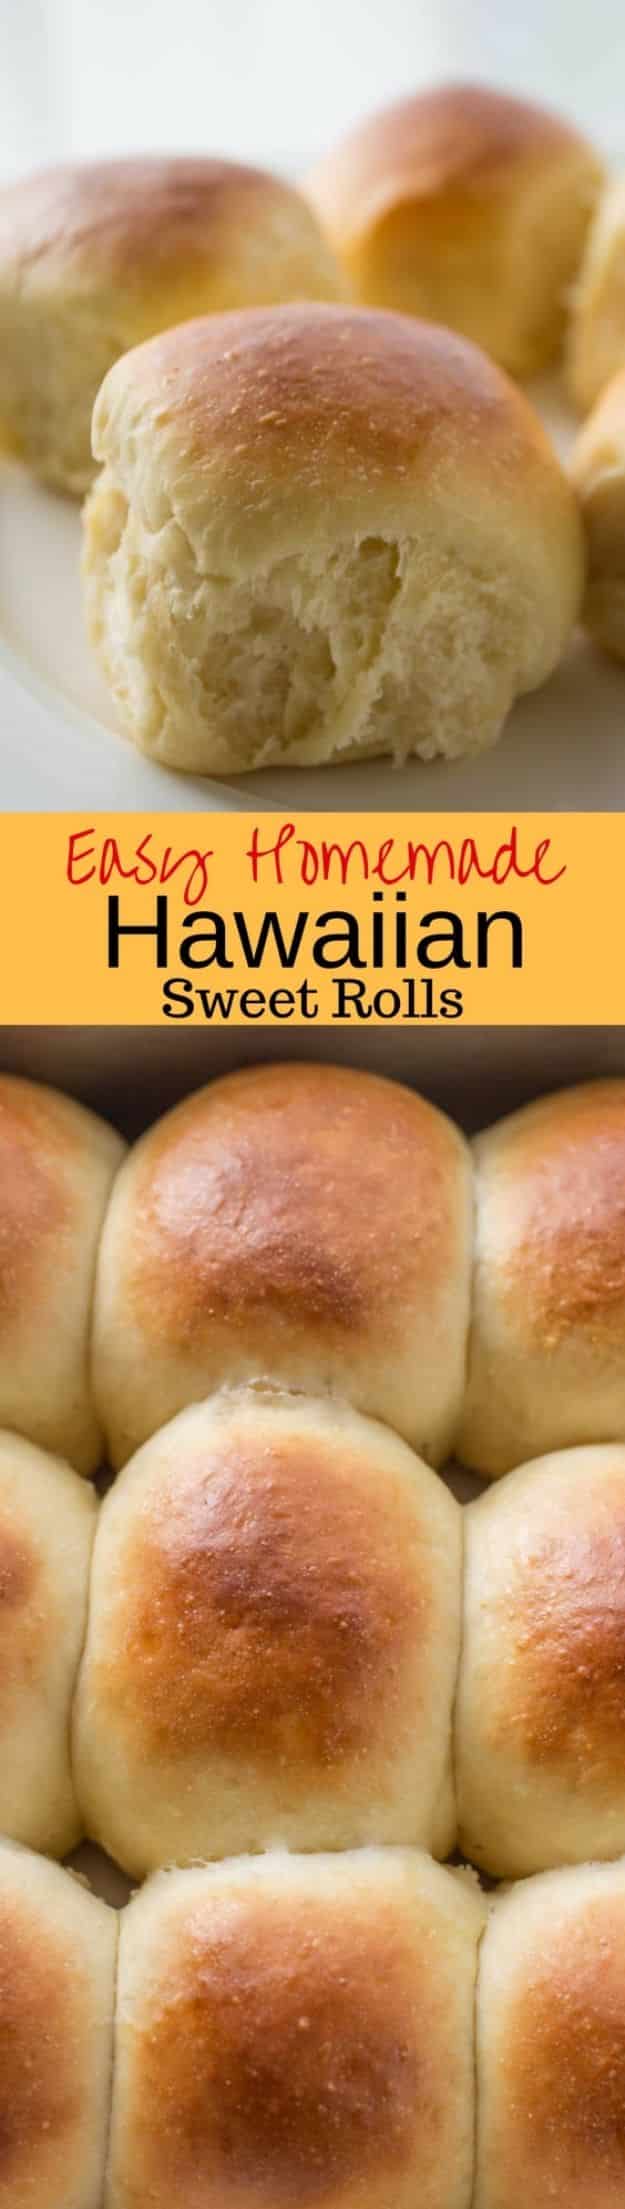 Homemade Hawaiian Sweet Rolls Recipe - How to Make Hawaiian Rolls - Easy Bread Recipes #breadrecipes